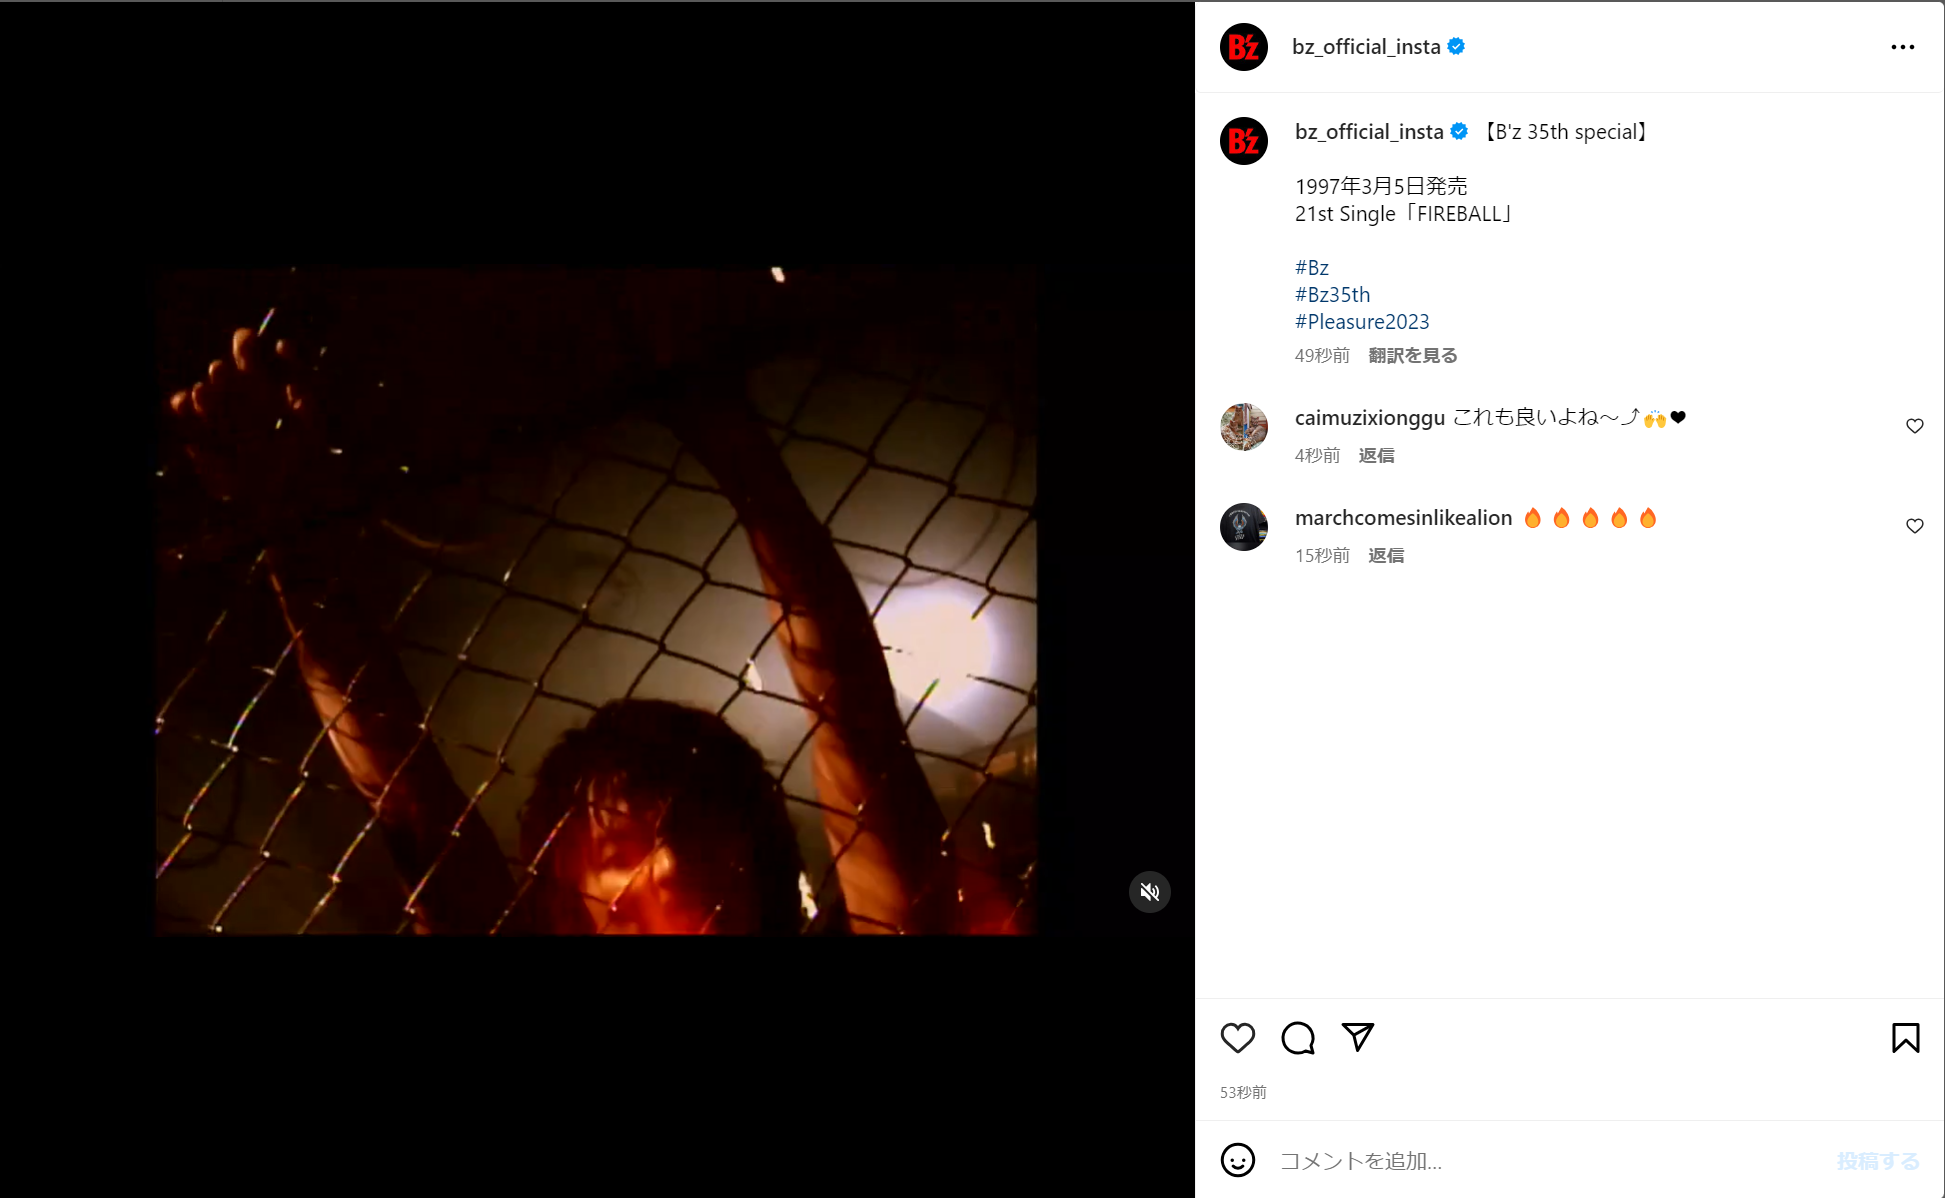 B'z公式Instagramに投稿された「FIREBALL」のミュージック・ビデオ